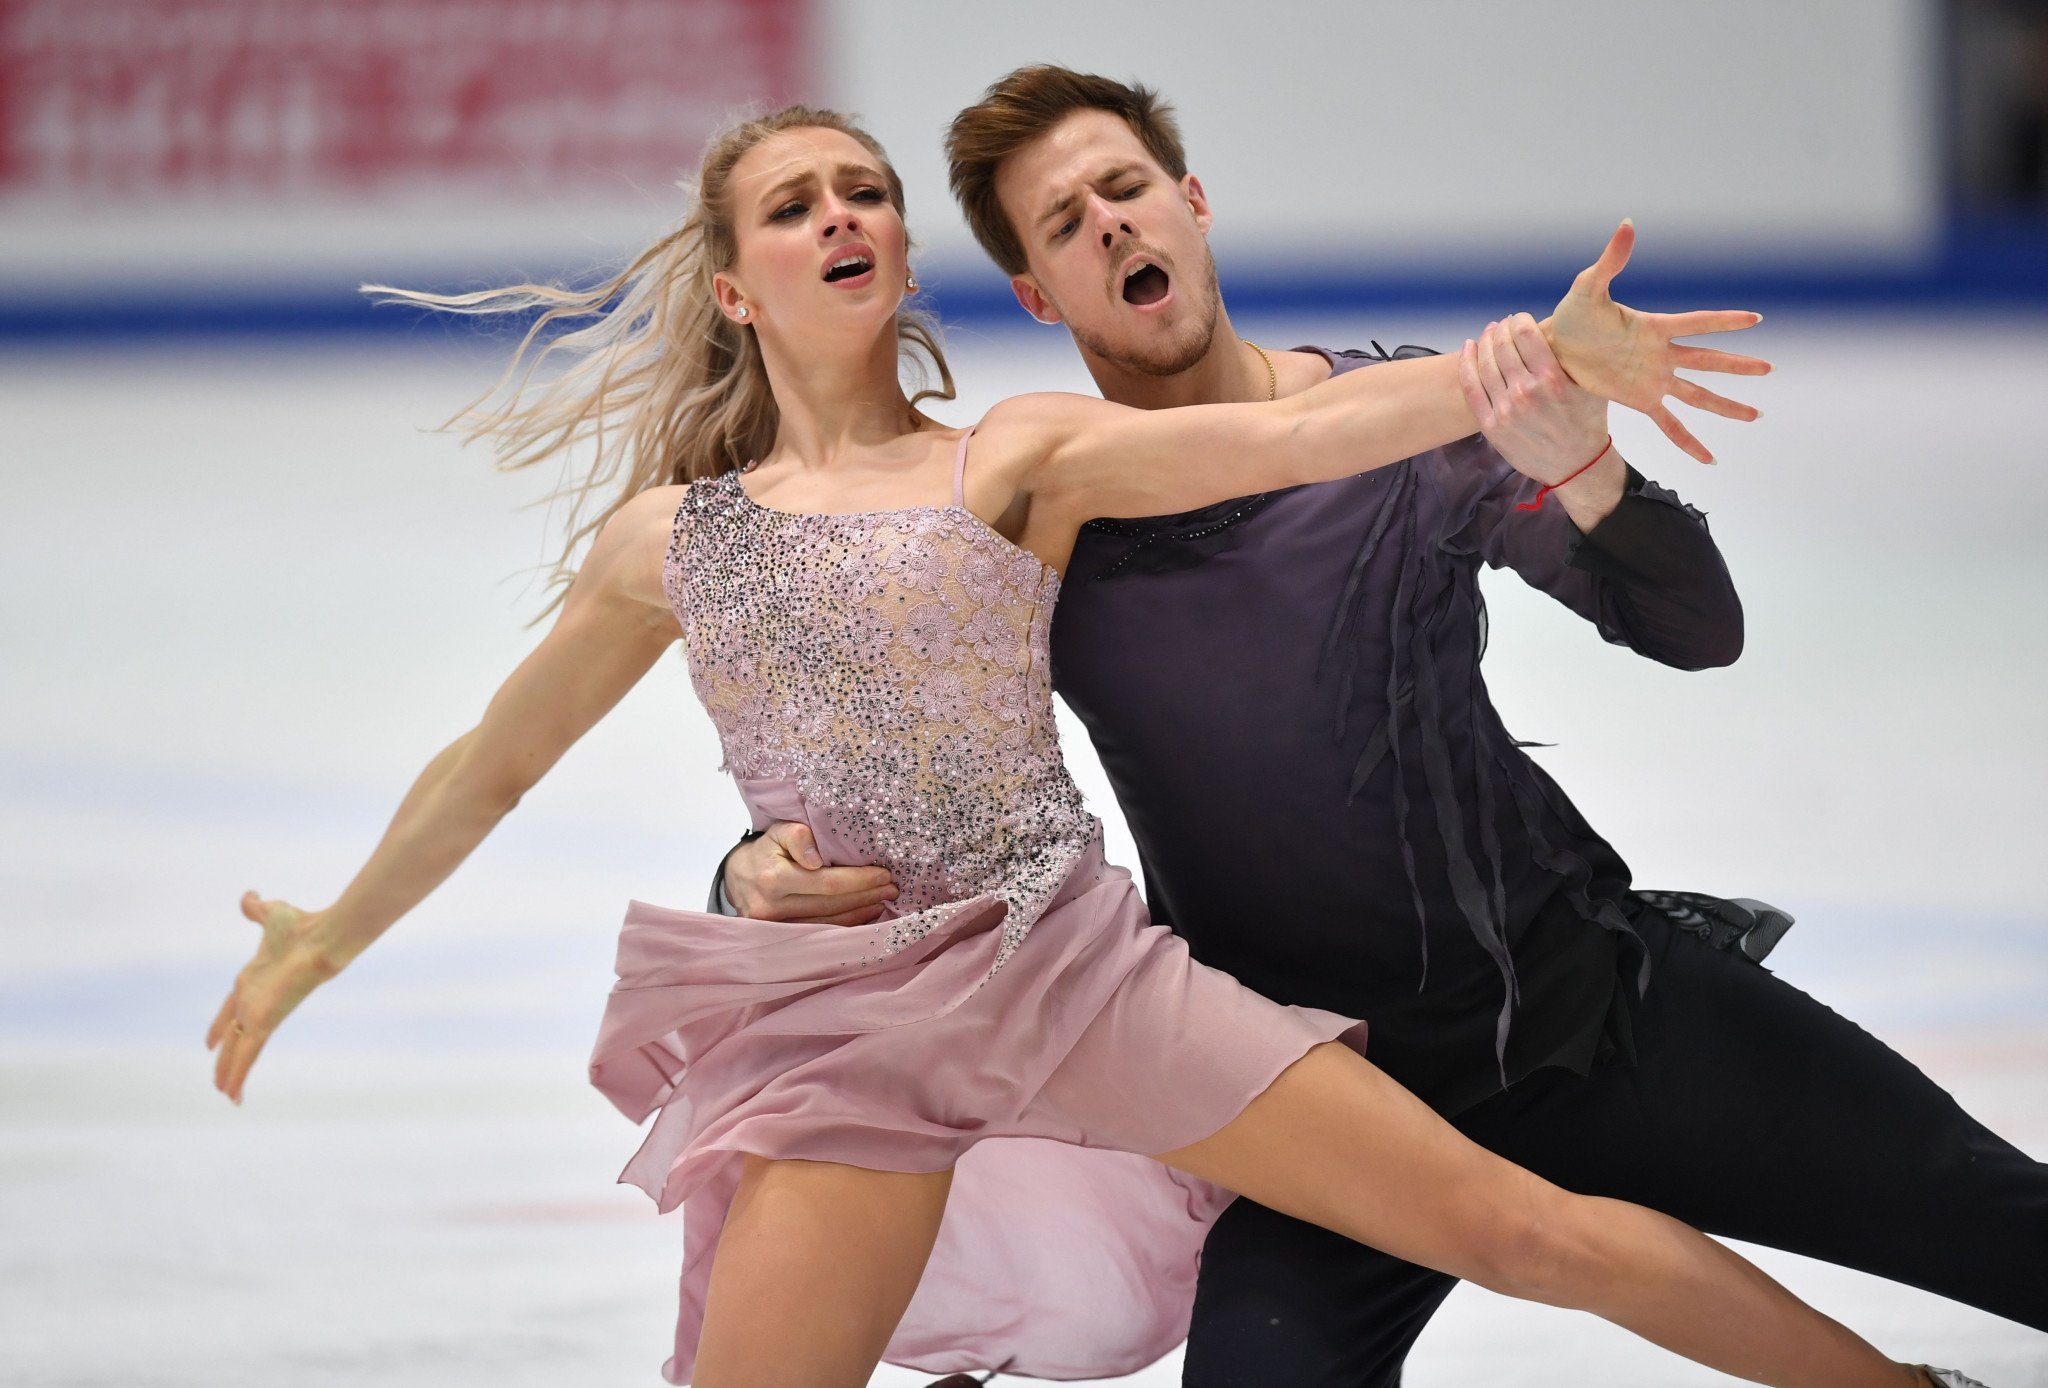  Ruşii Sinitsina şi Katsalapov au câştigat medalia de aur la dans la CM de patinaj artistic